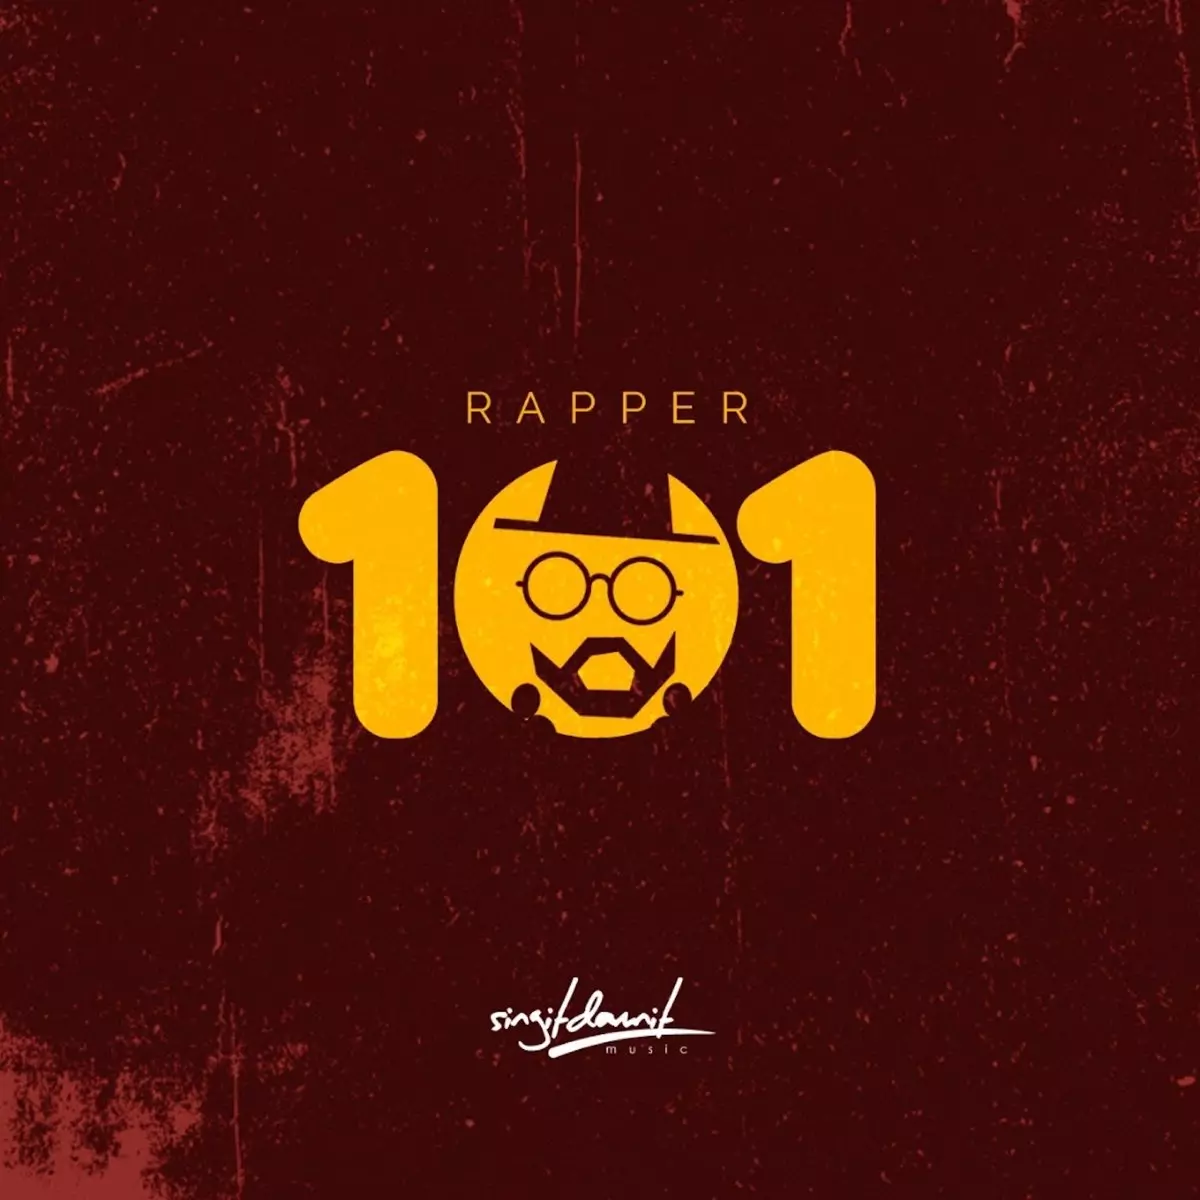 Rapper 101 - Single by M.anifest on Apple Music